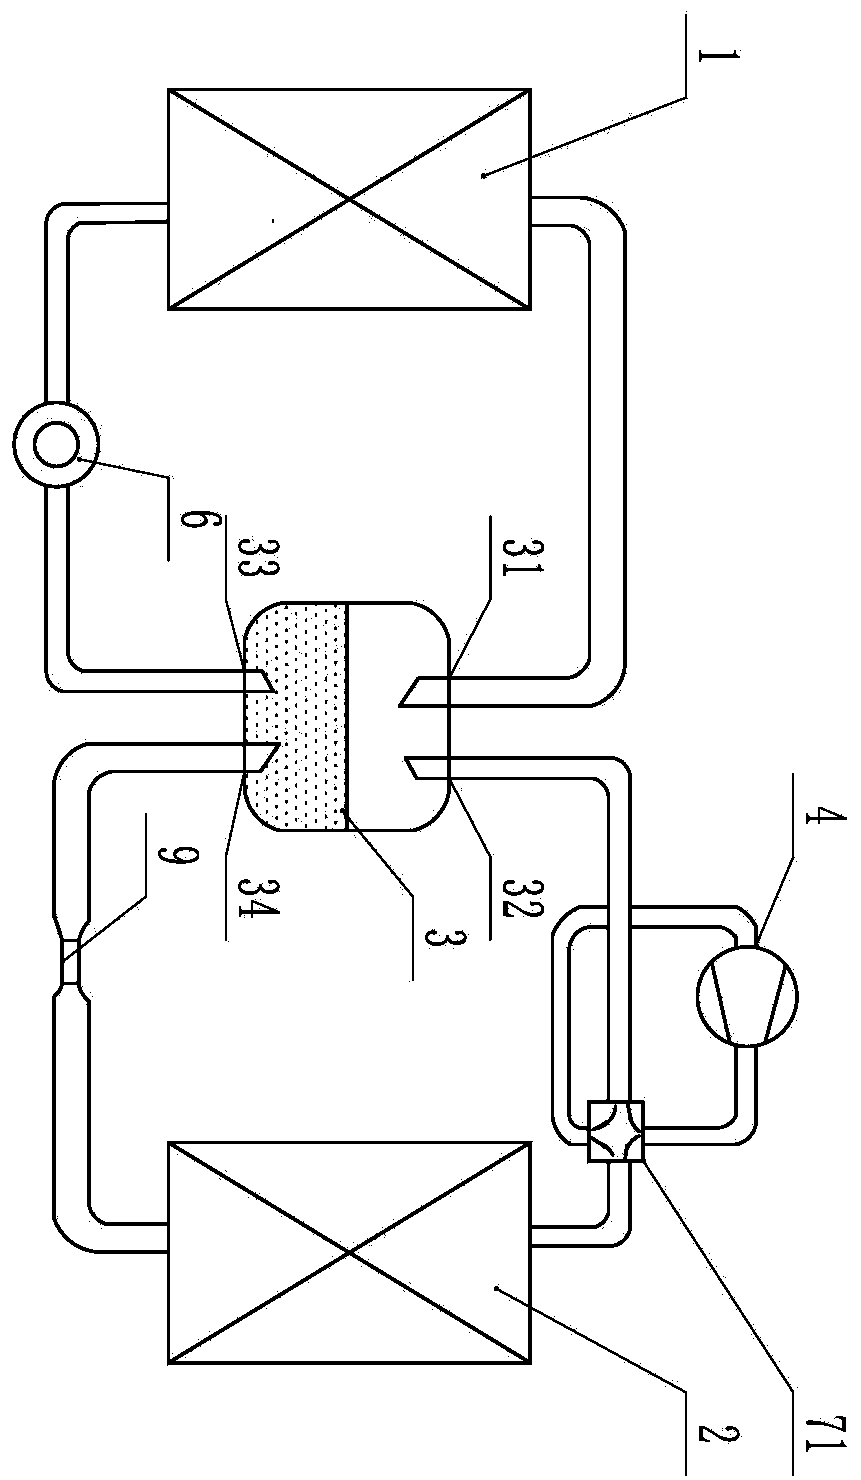 Phase change heat pump system